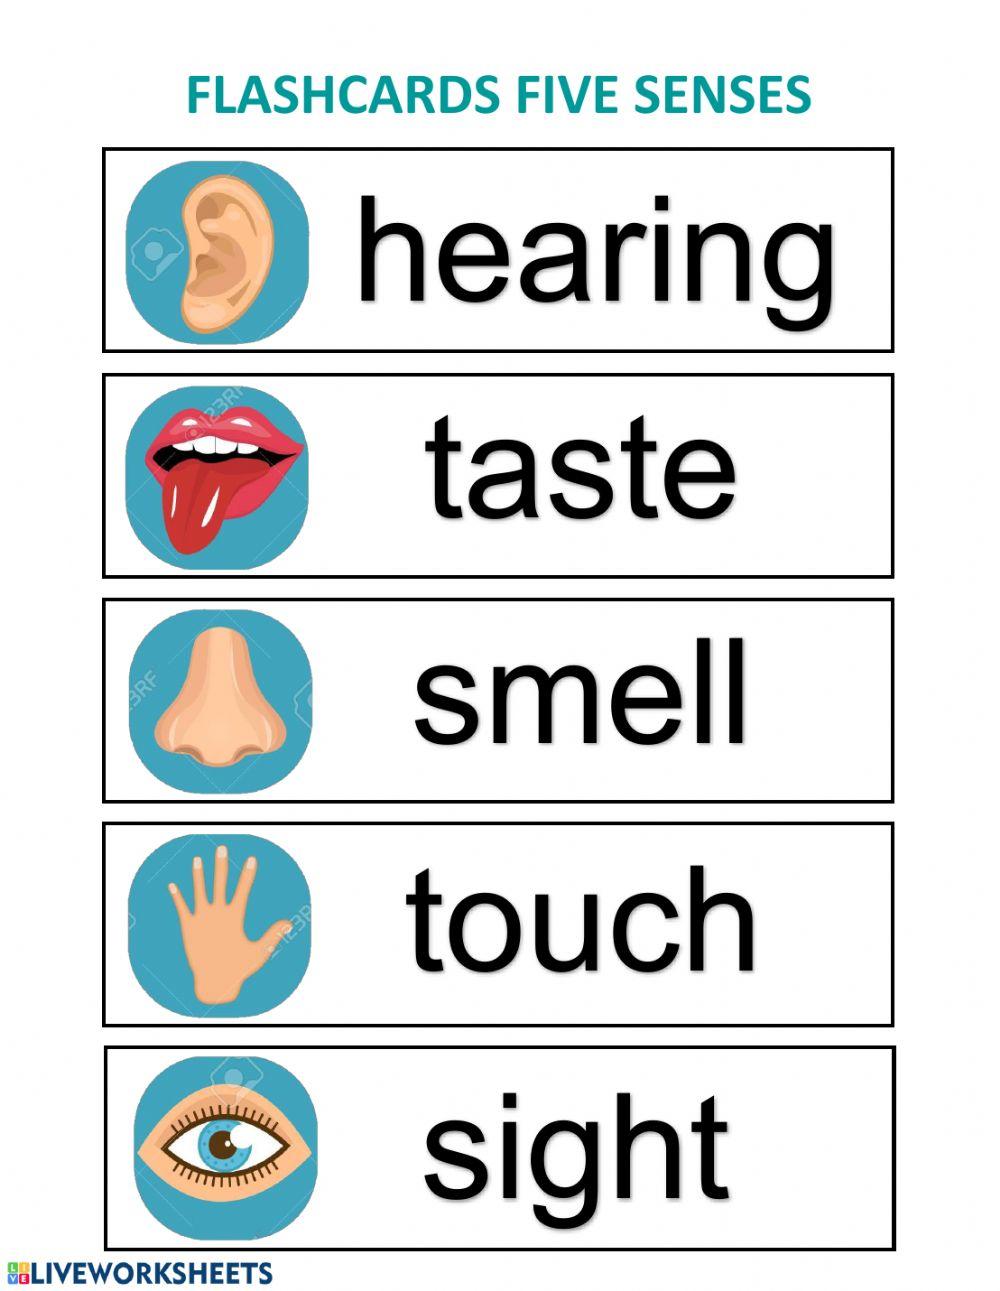 Flashcards five senses